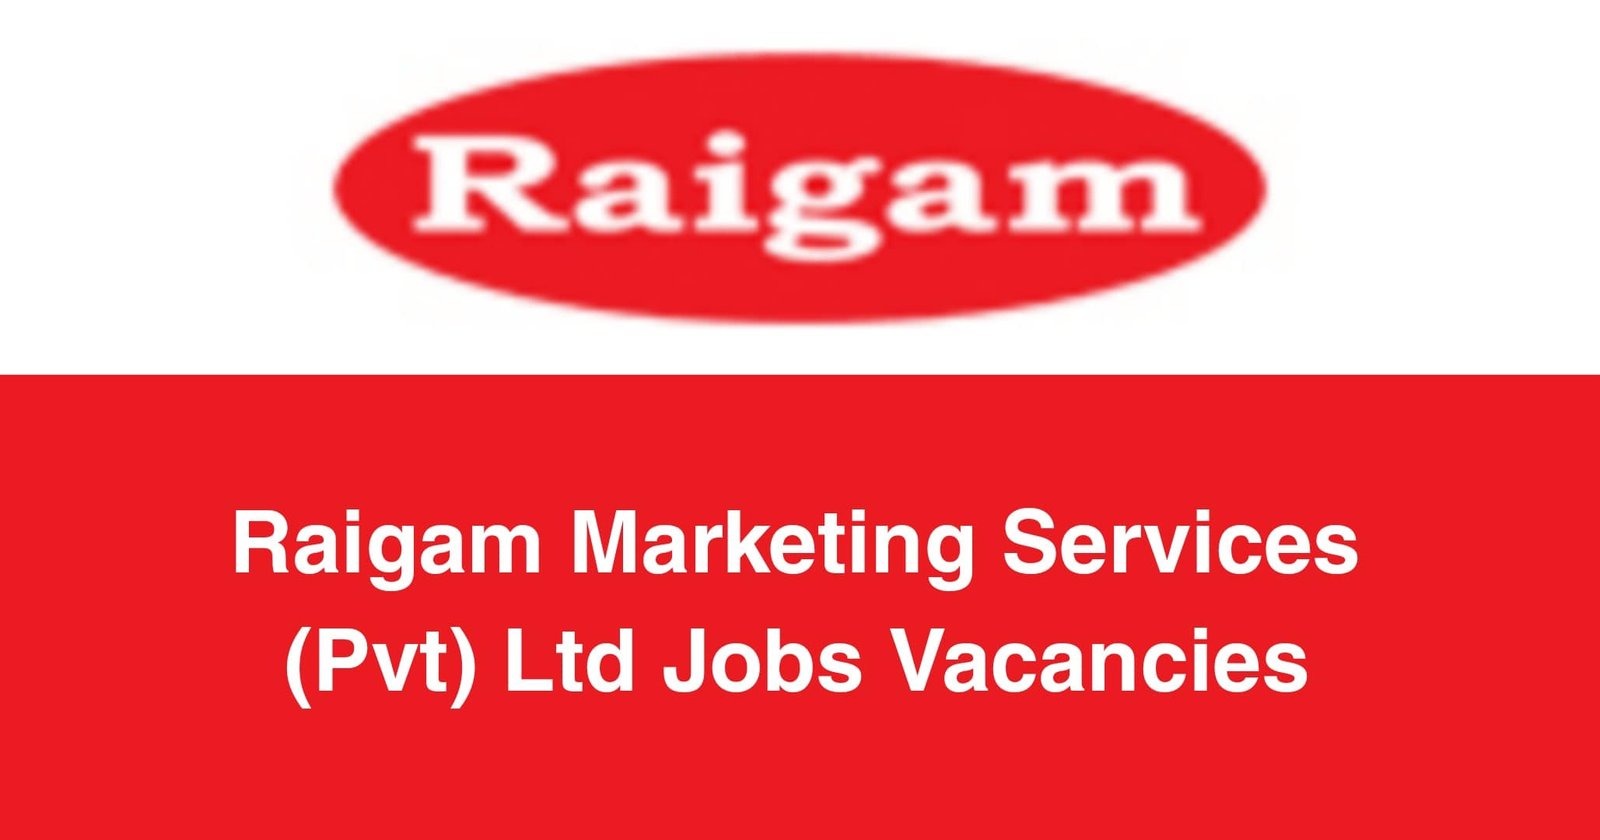 Raigam Marketing Services (Pvt) Ltd Jobs Vacancies